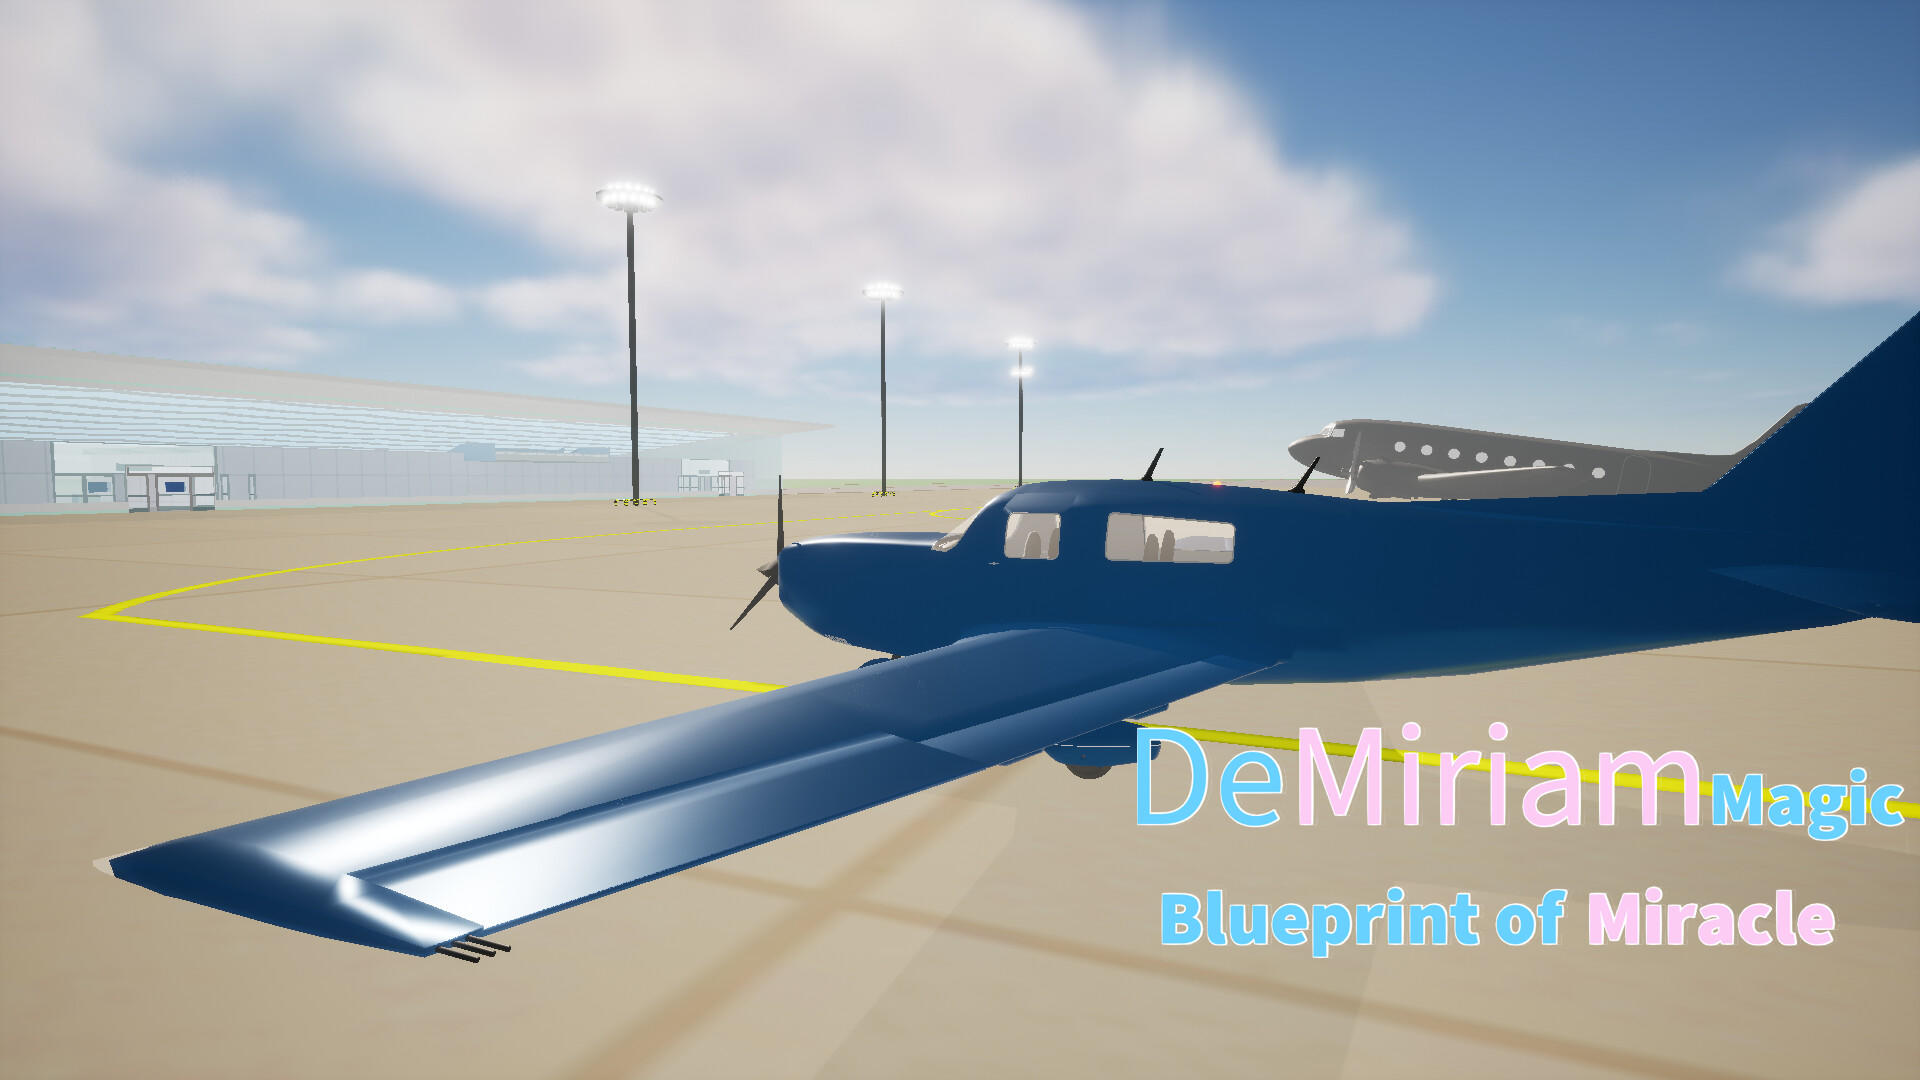 DeMiriam Magic: Blueprint of Miracle screenshot game